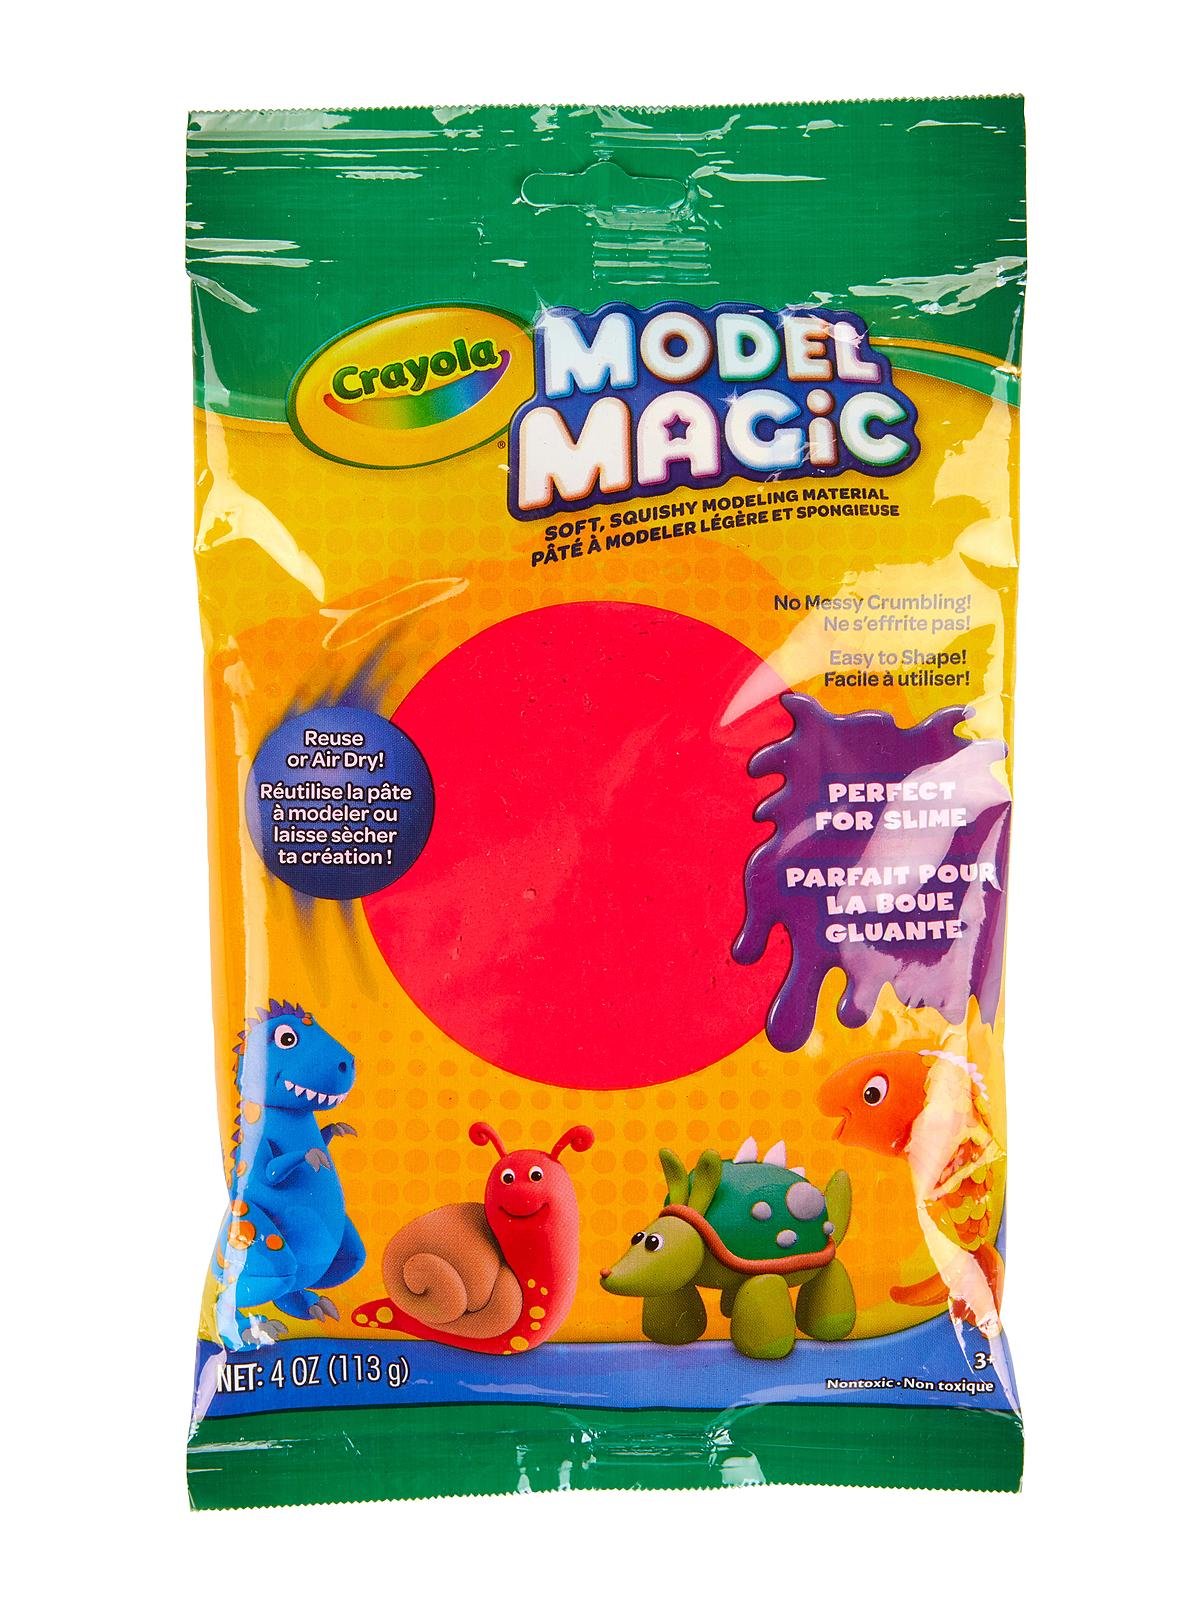 Crayola Model Magic Modeling Material, Single Packs - 6 pack, 0.5 oz packs